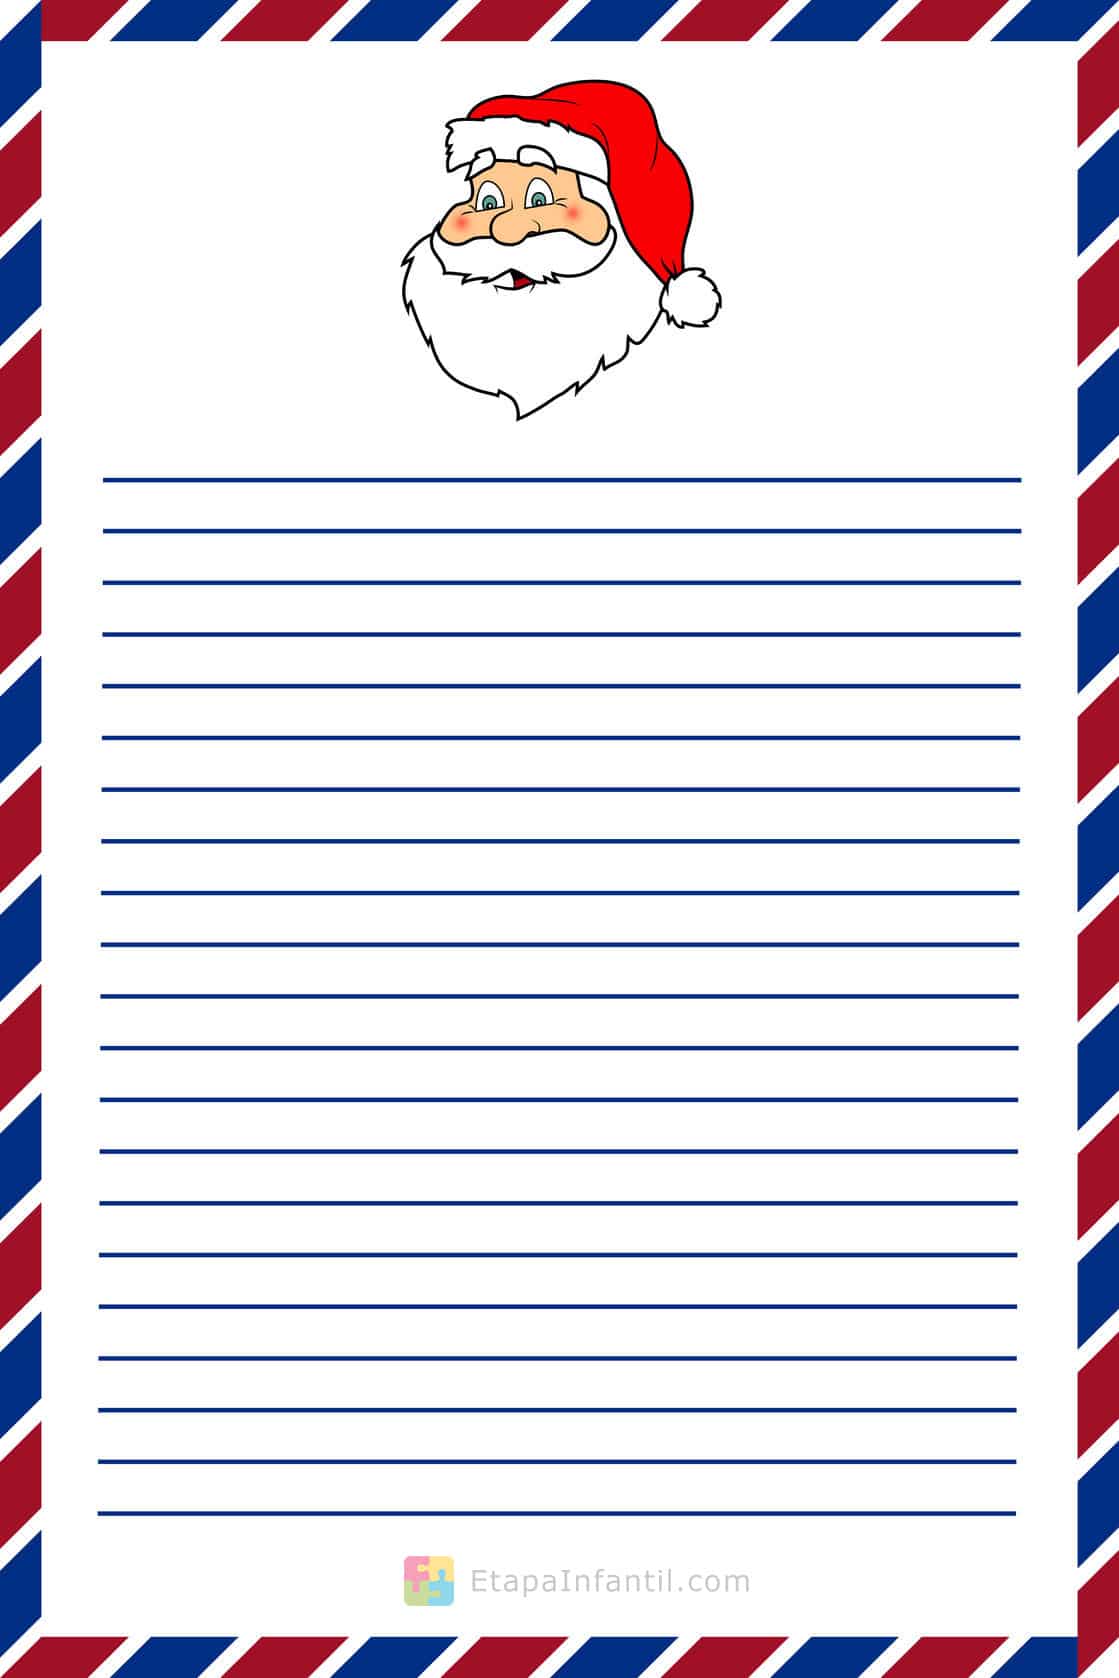 Carta a Papa Noel para imprimir